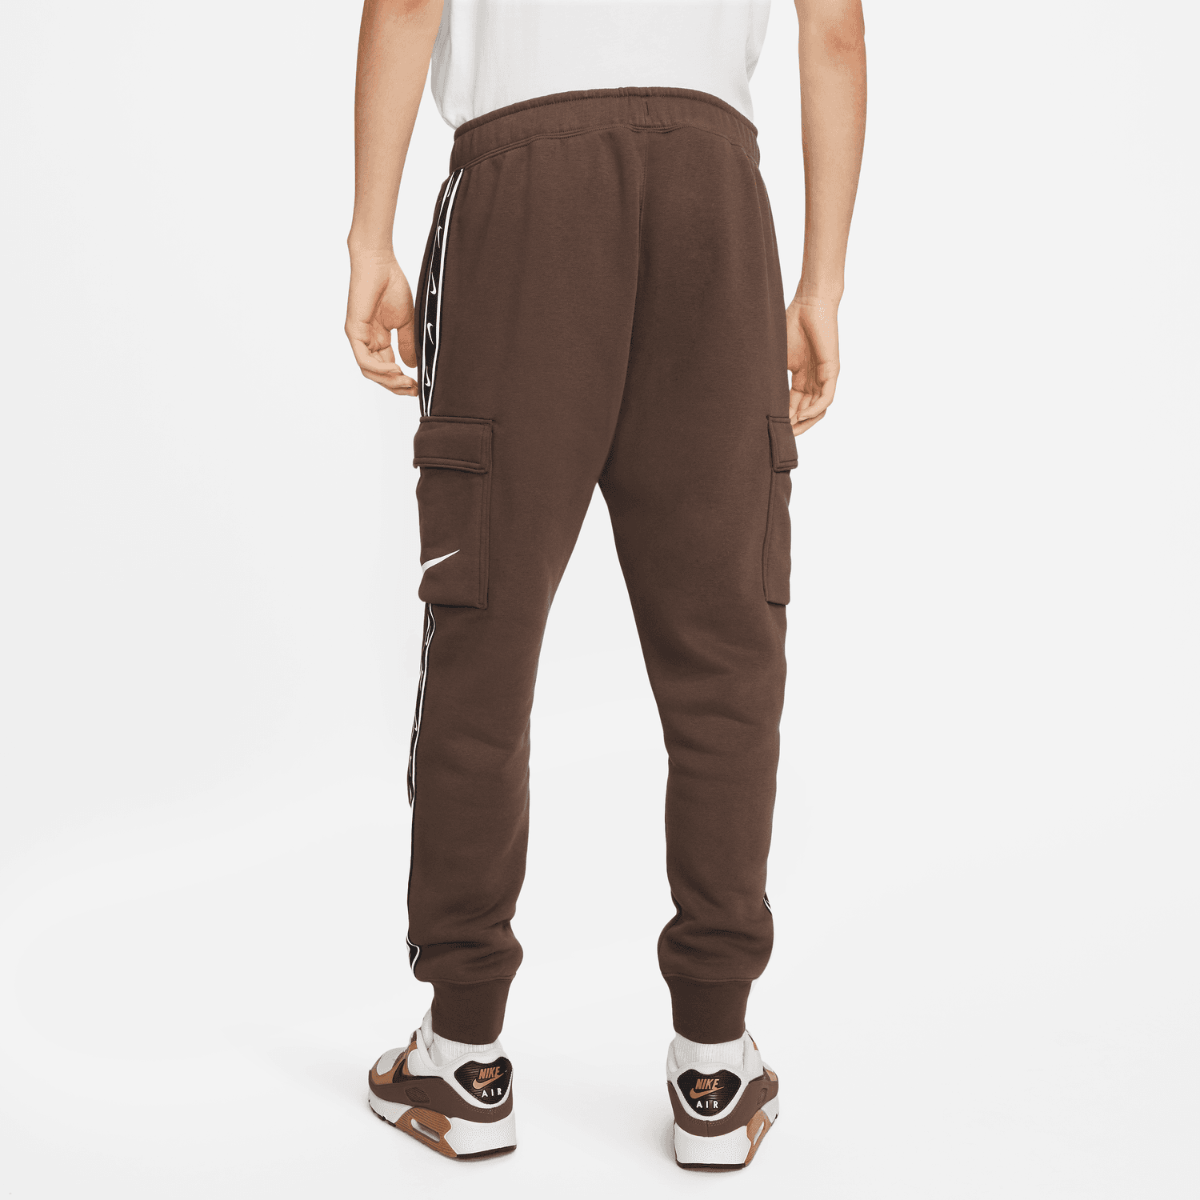 Nike Sportswear Repeat Hose – Braun/Weiß/Schwarz